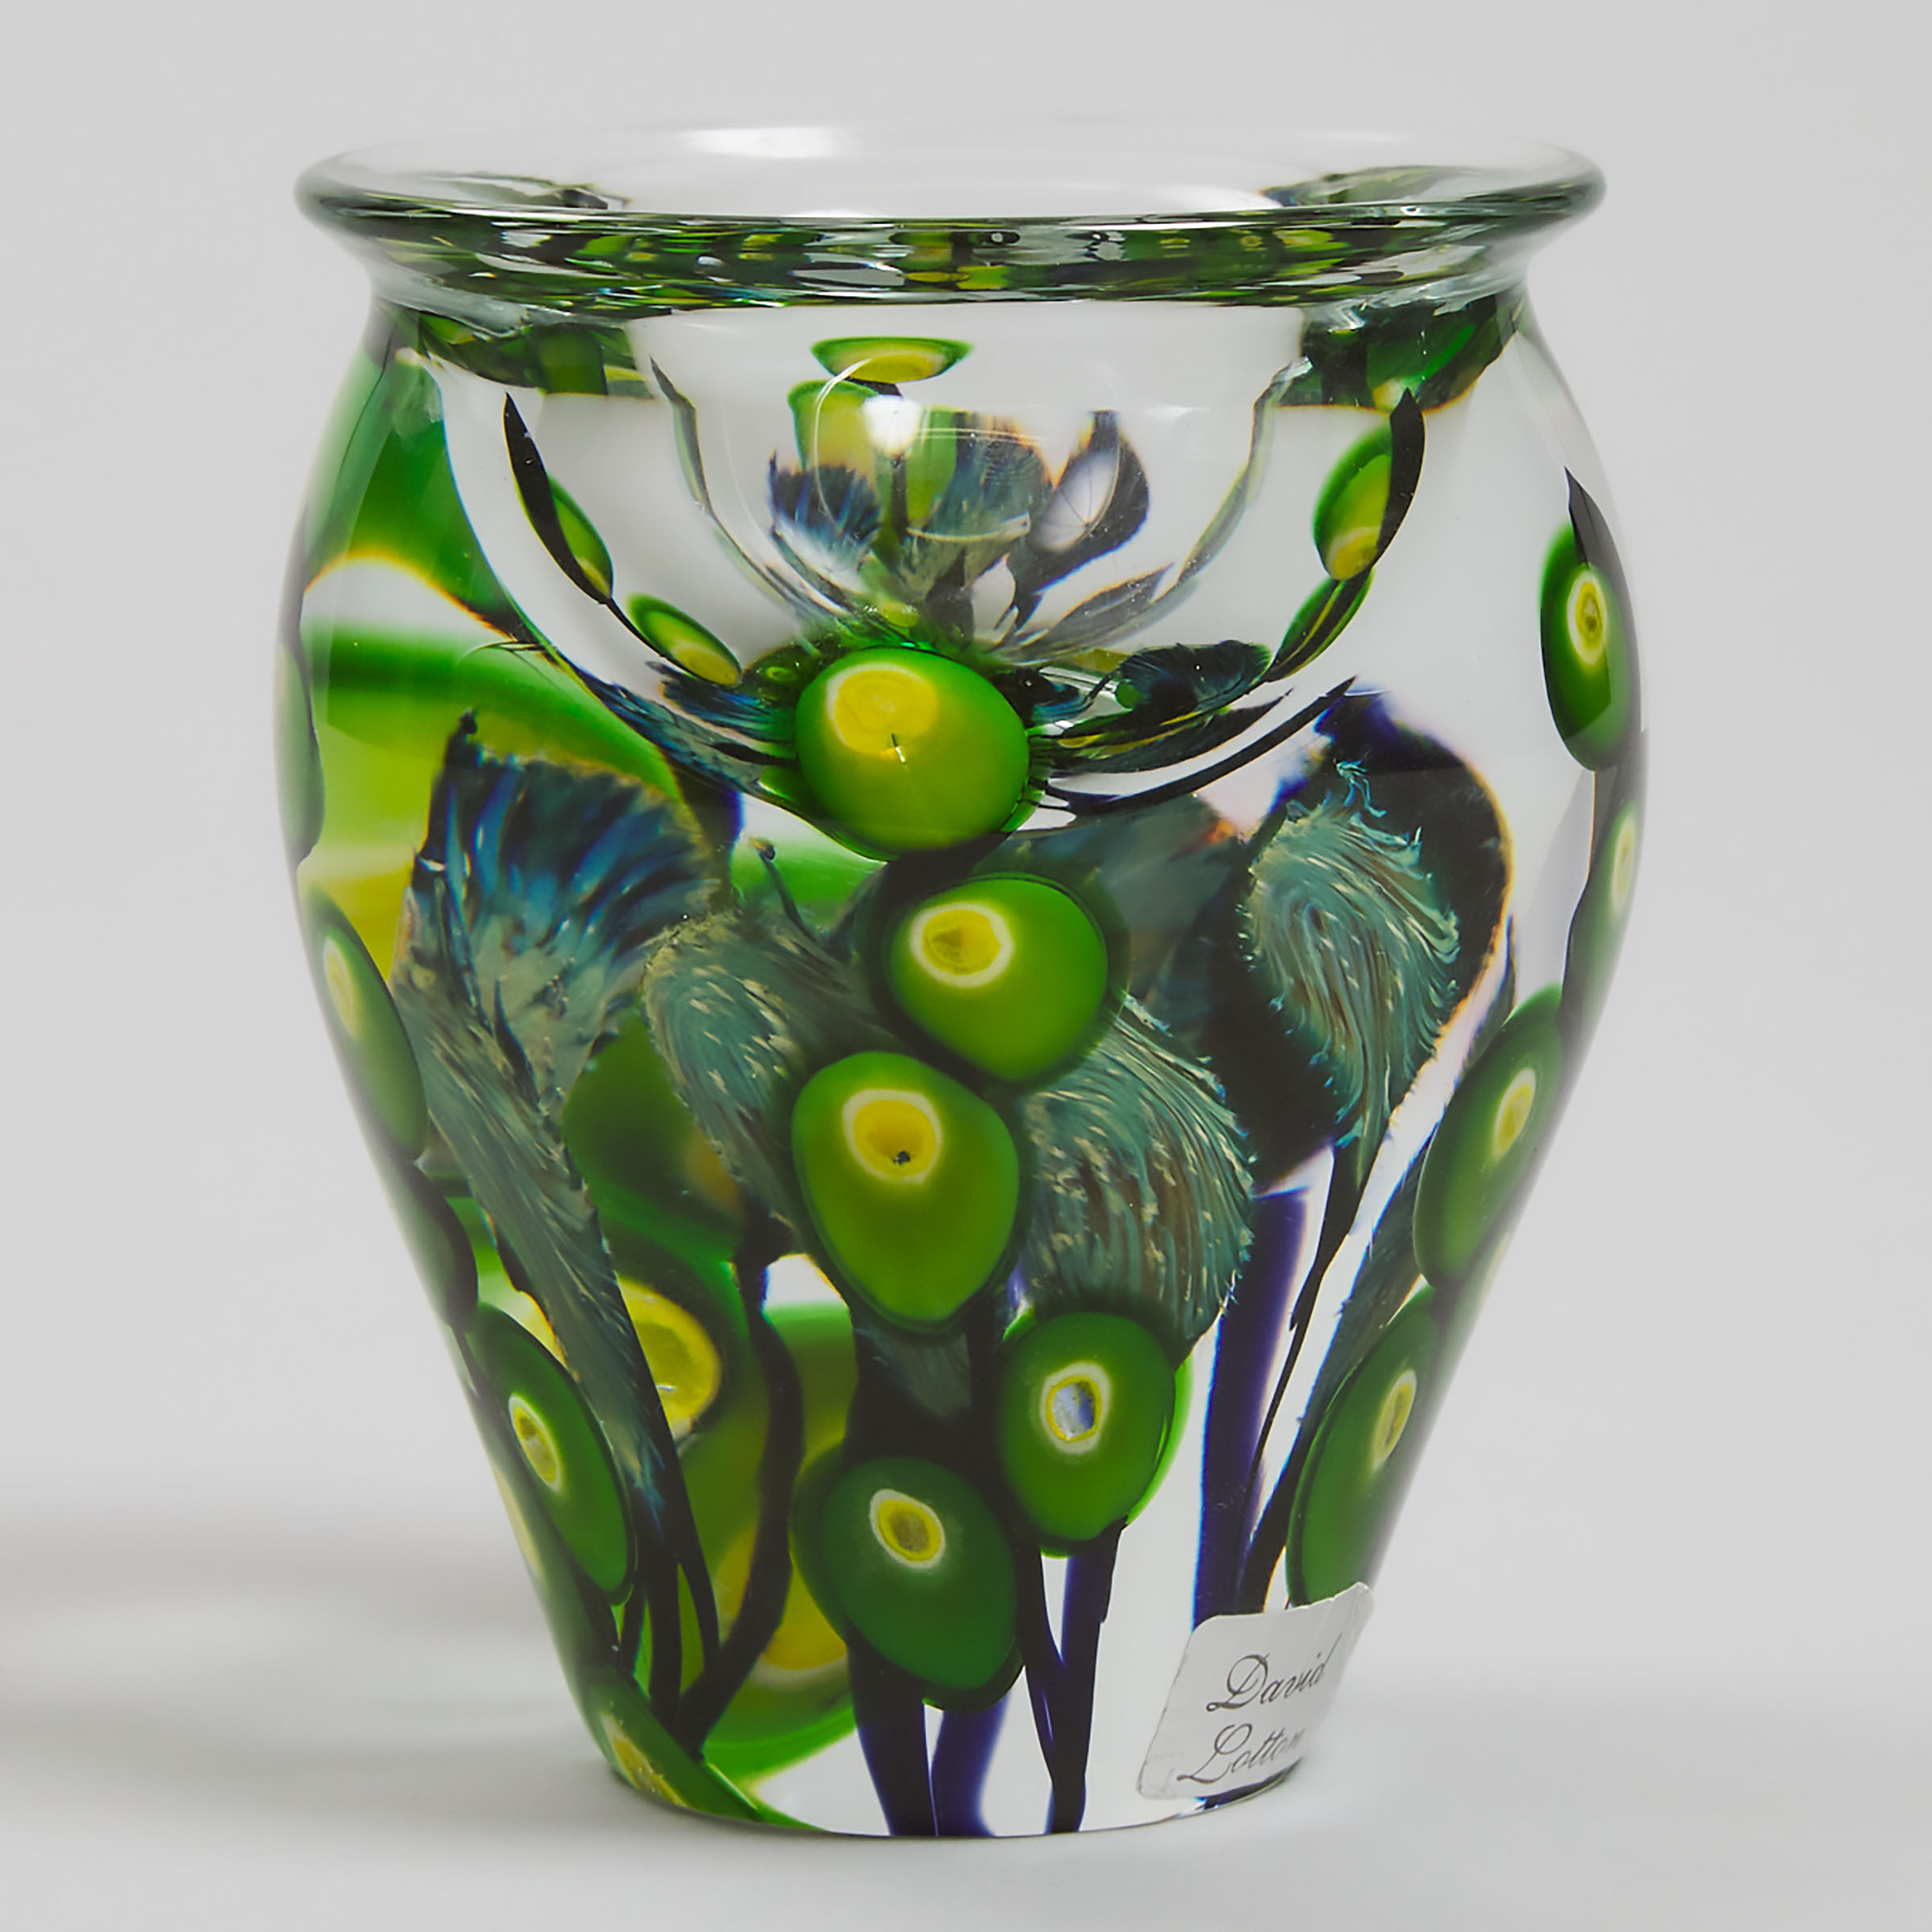 David Lotton (American, b.1960), Internally Decorated Glass Paperweight Vase, 2001